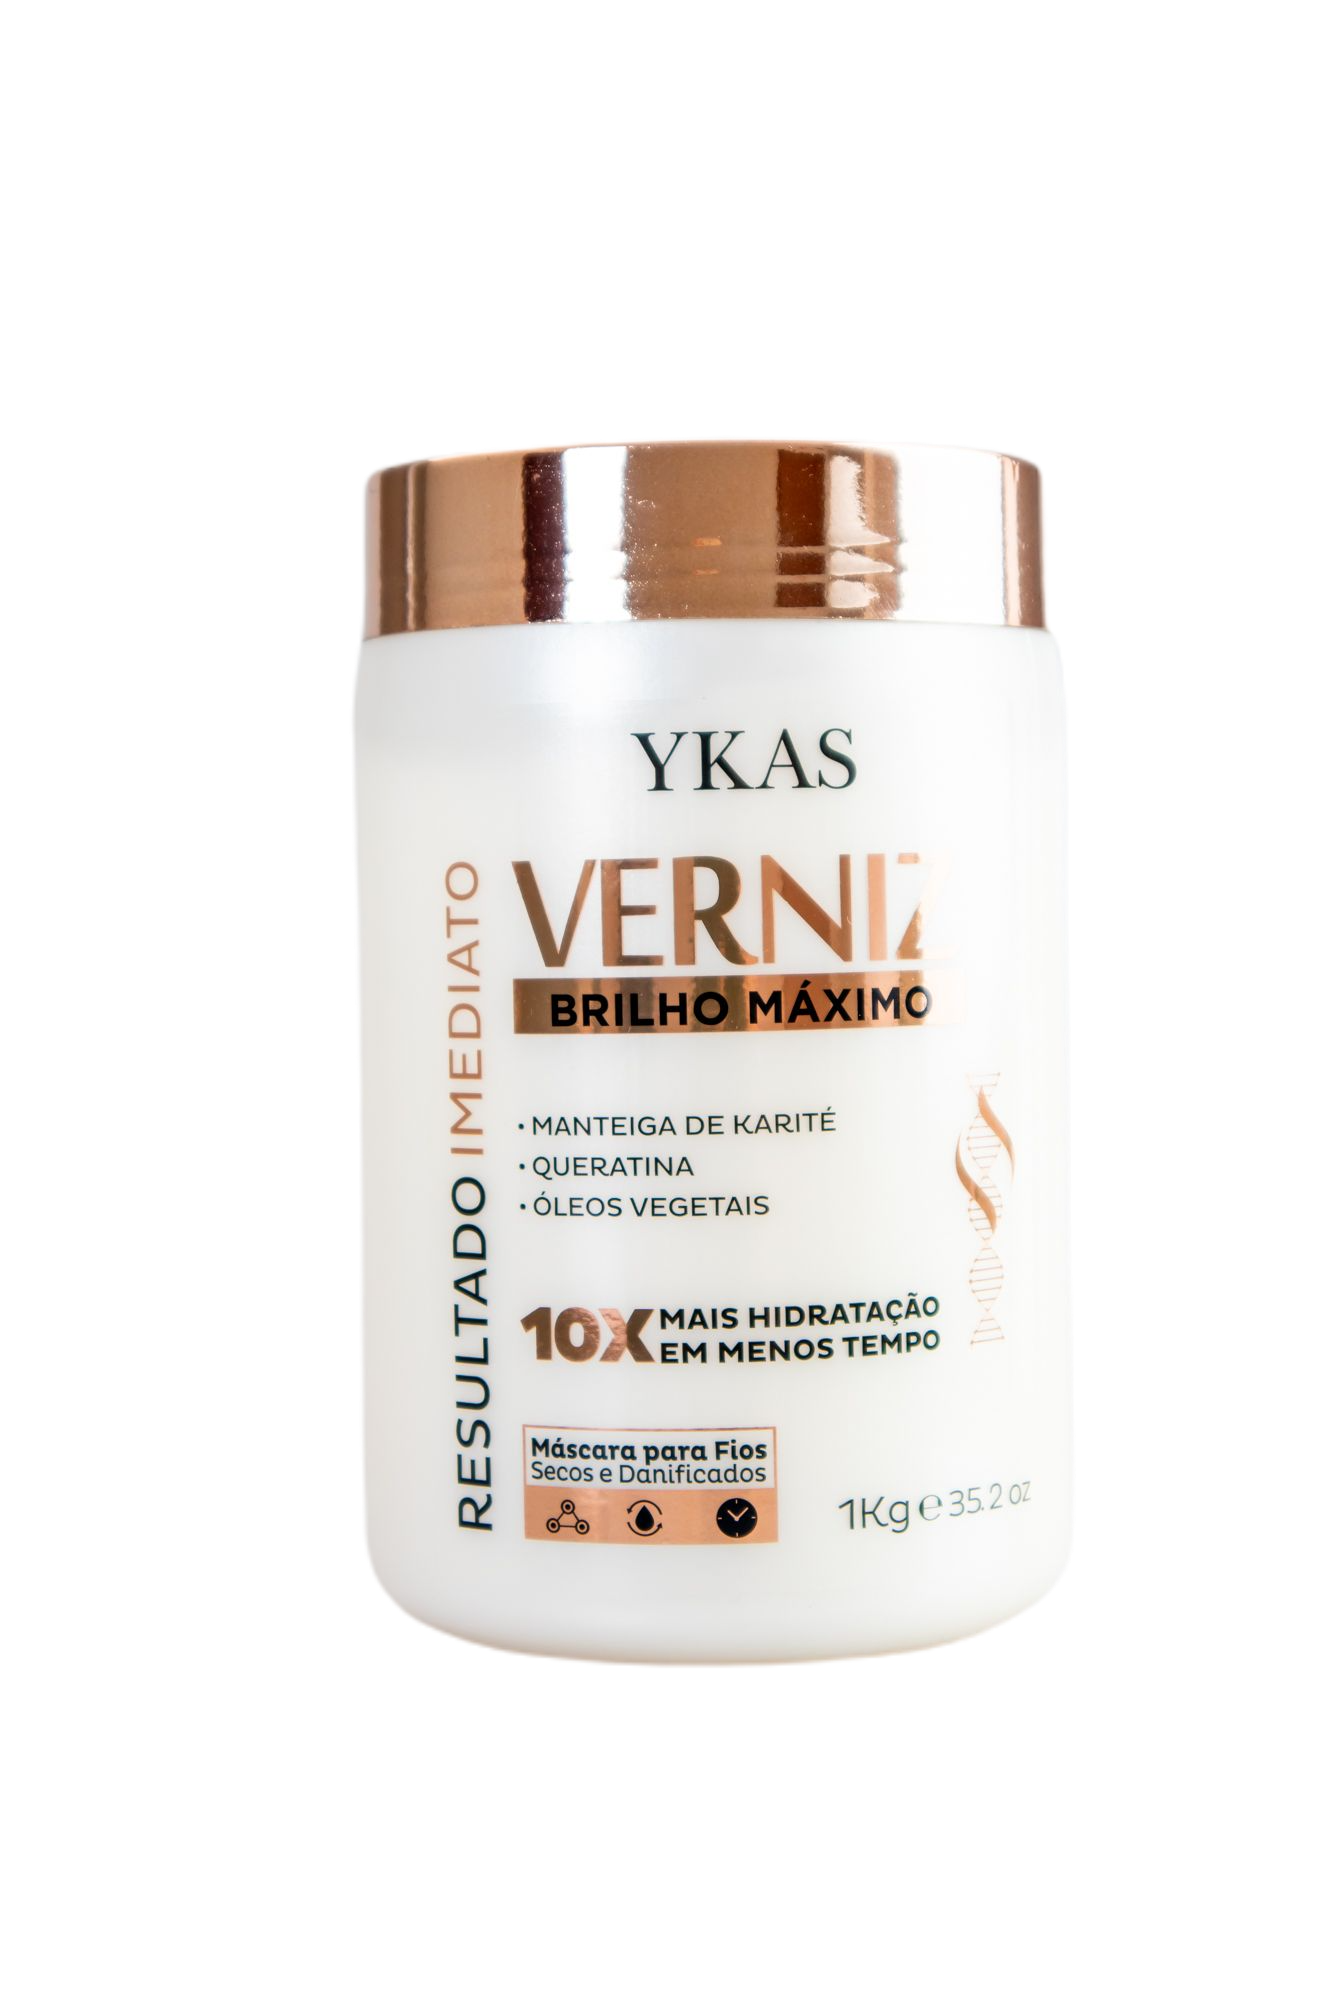 Ykas Hair Mask Varnish Bath Immediate Keratin Shea Butter Oils Hair Treatment Mask 1Kg - Ykas